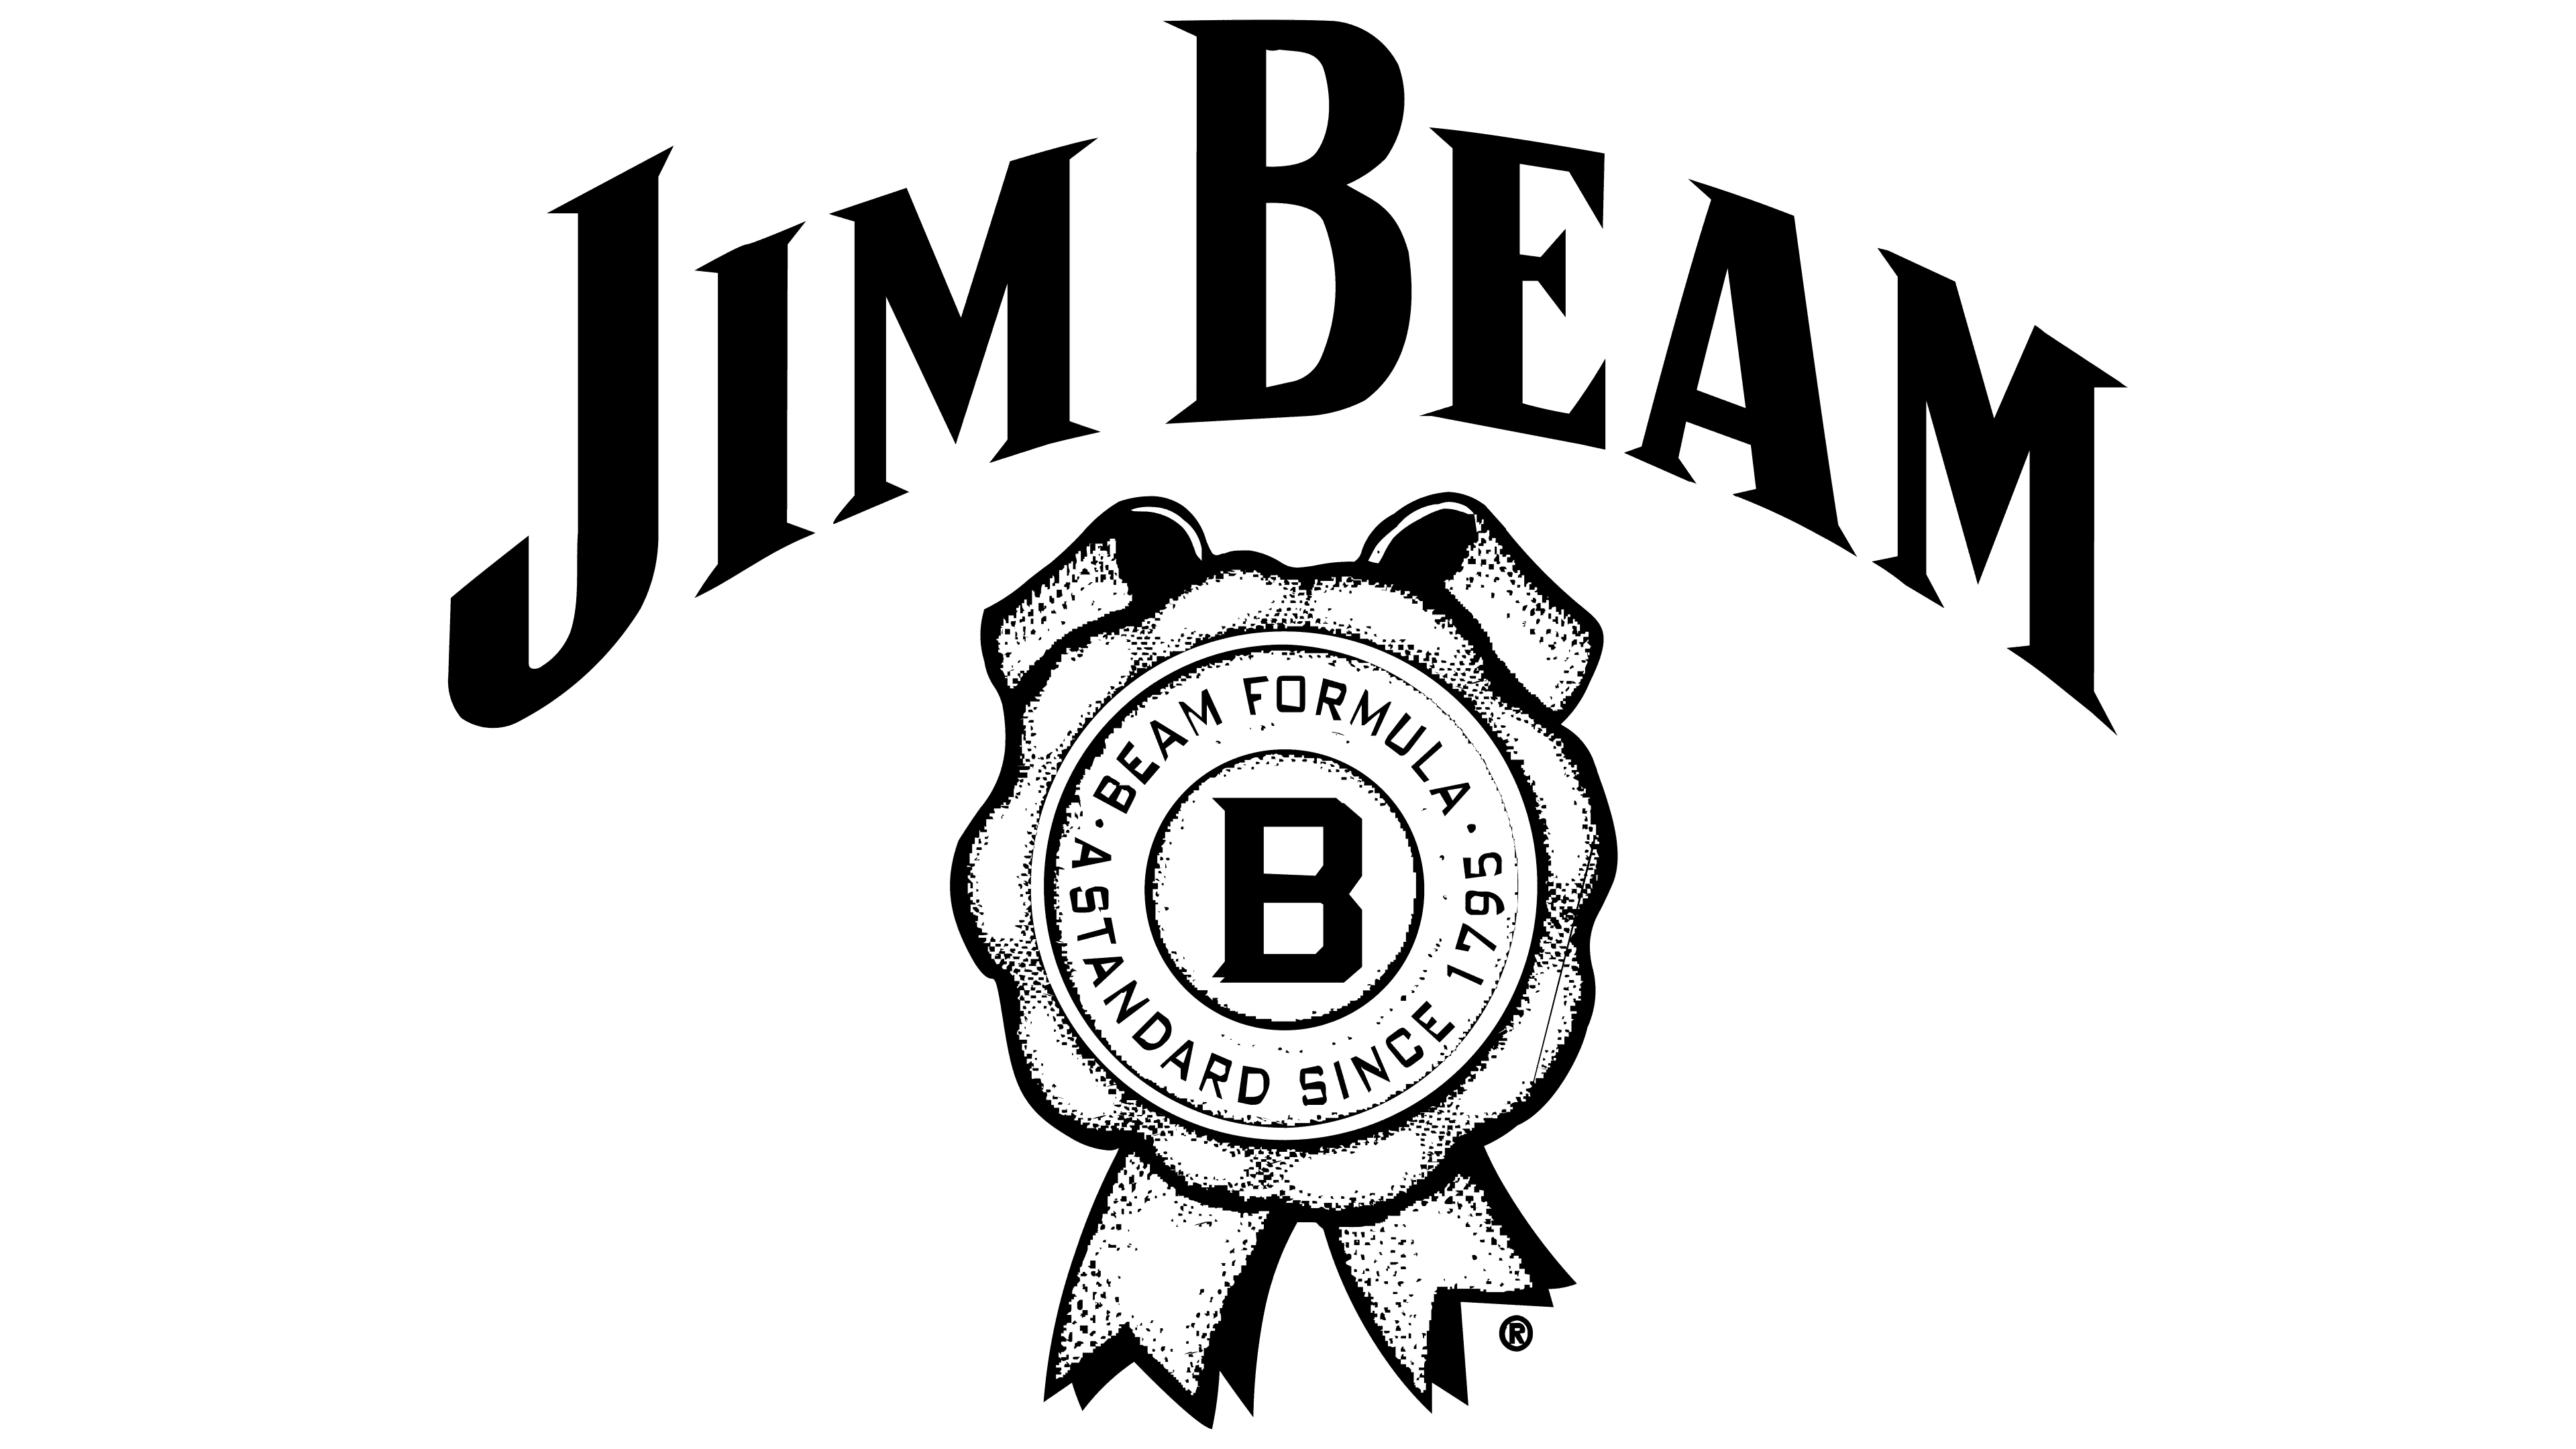 James Beam Distilling Co